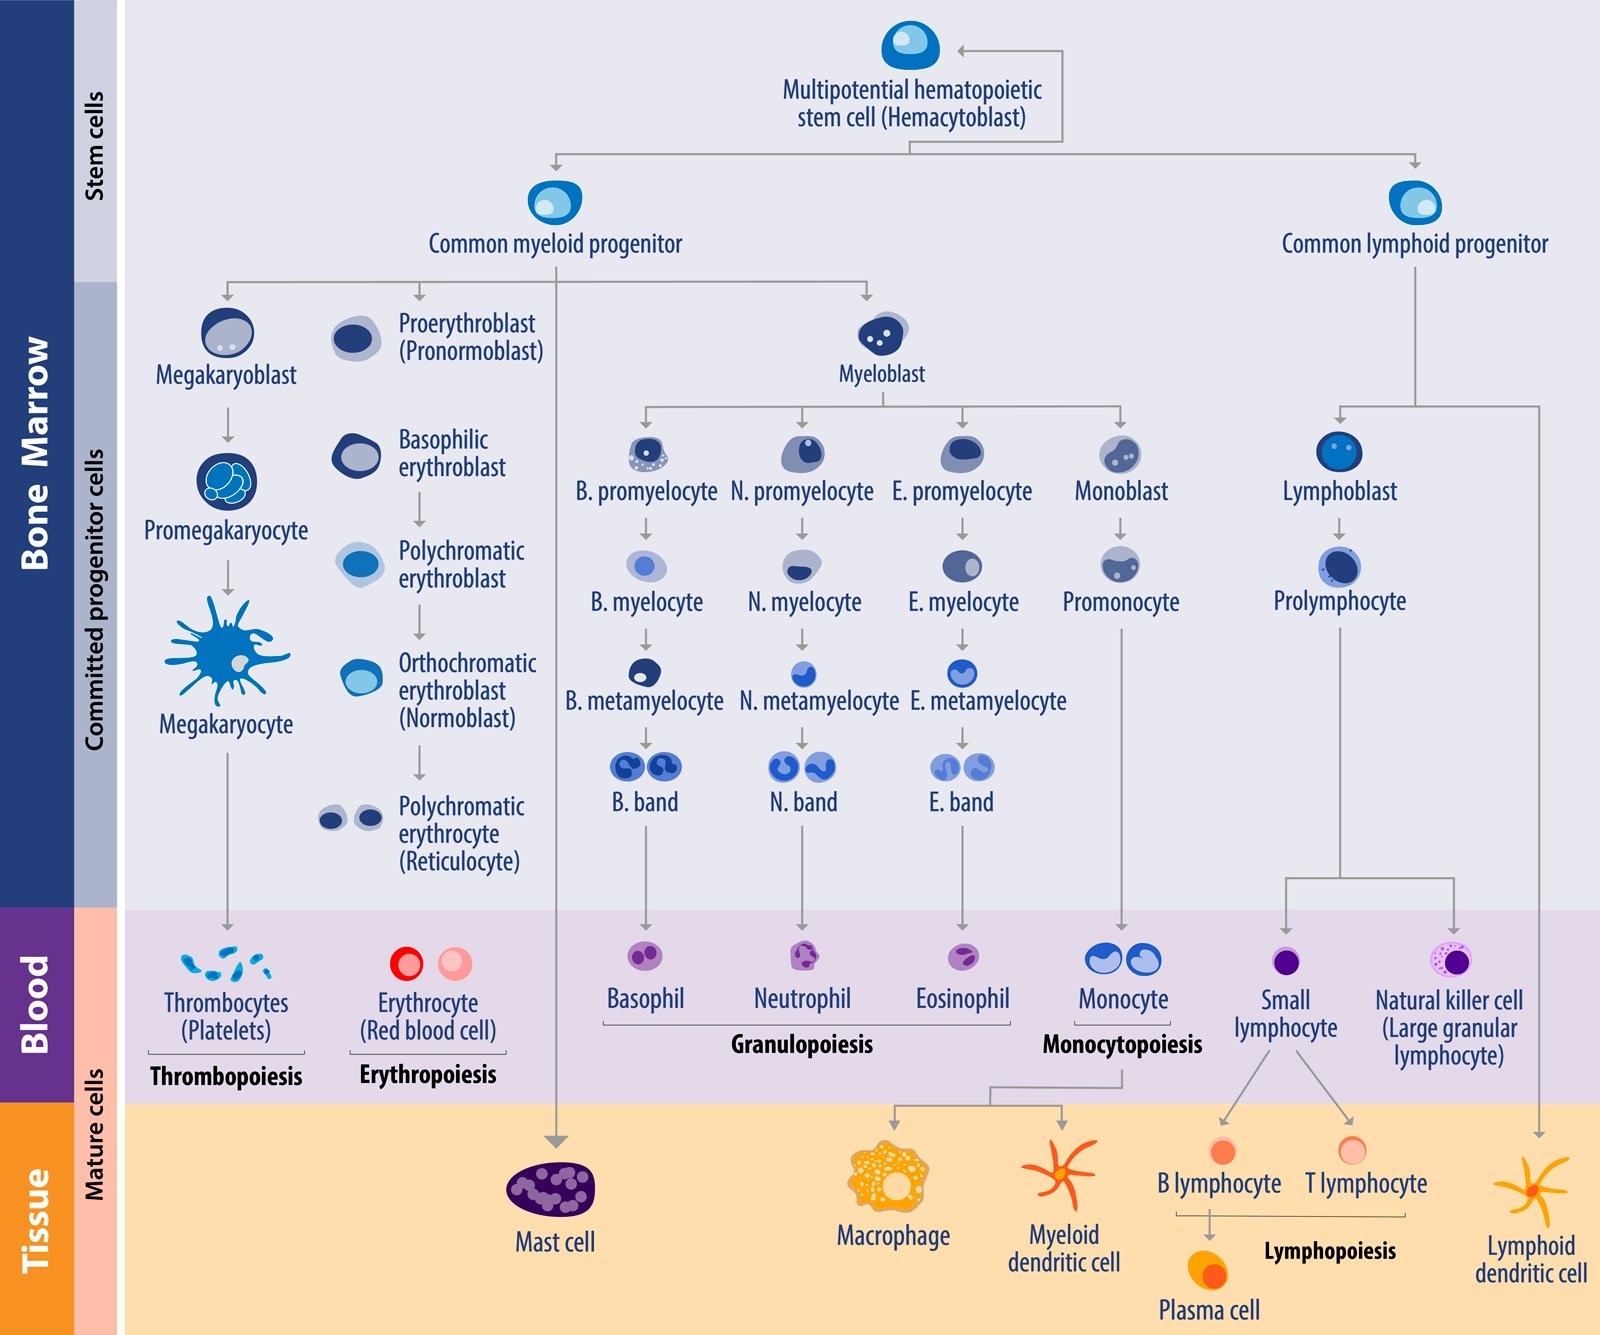 Genetic Abnormality Spectrum in Hematologic Cancers